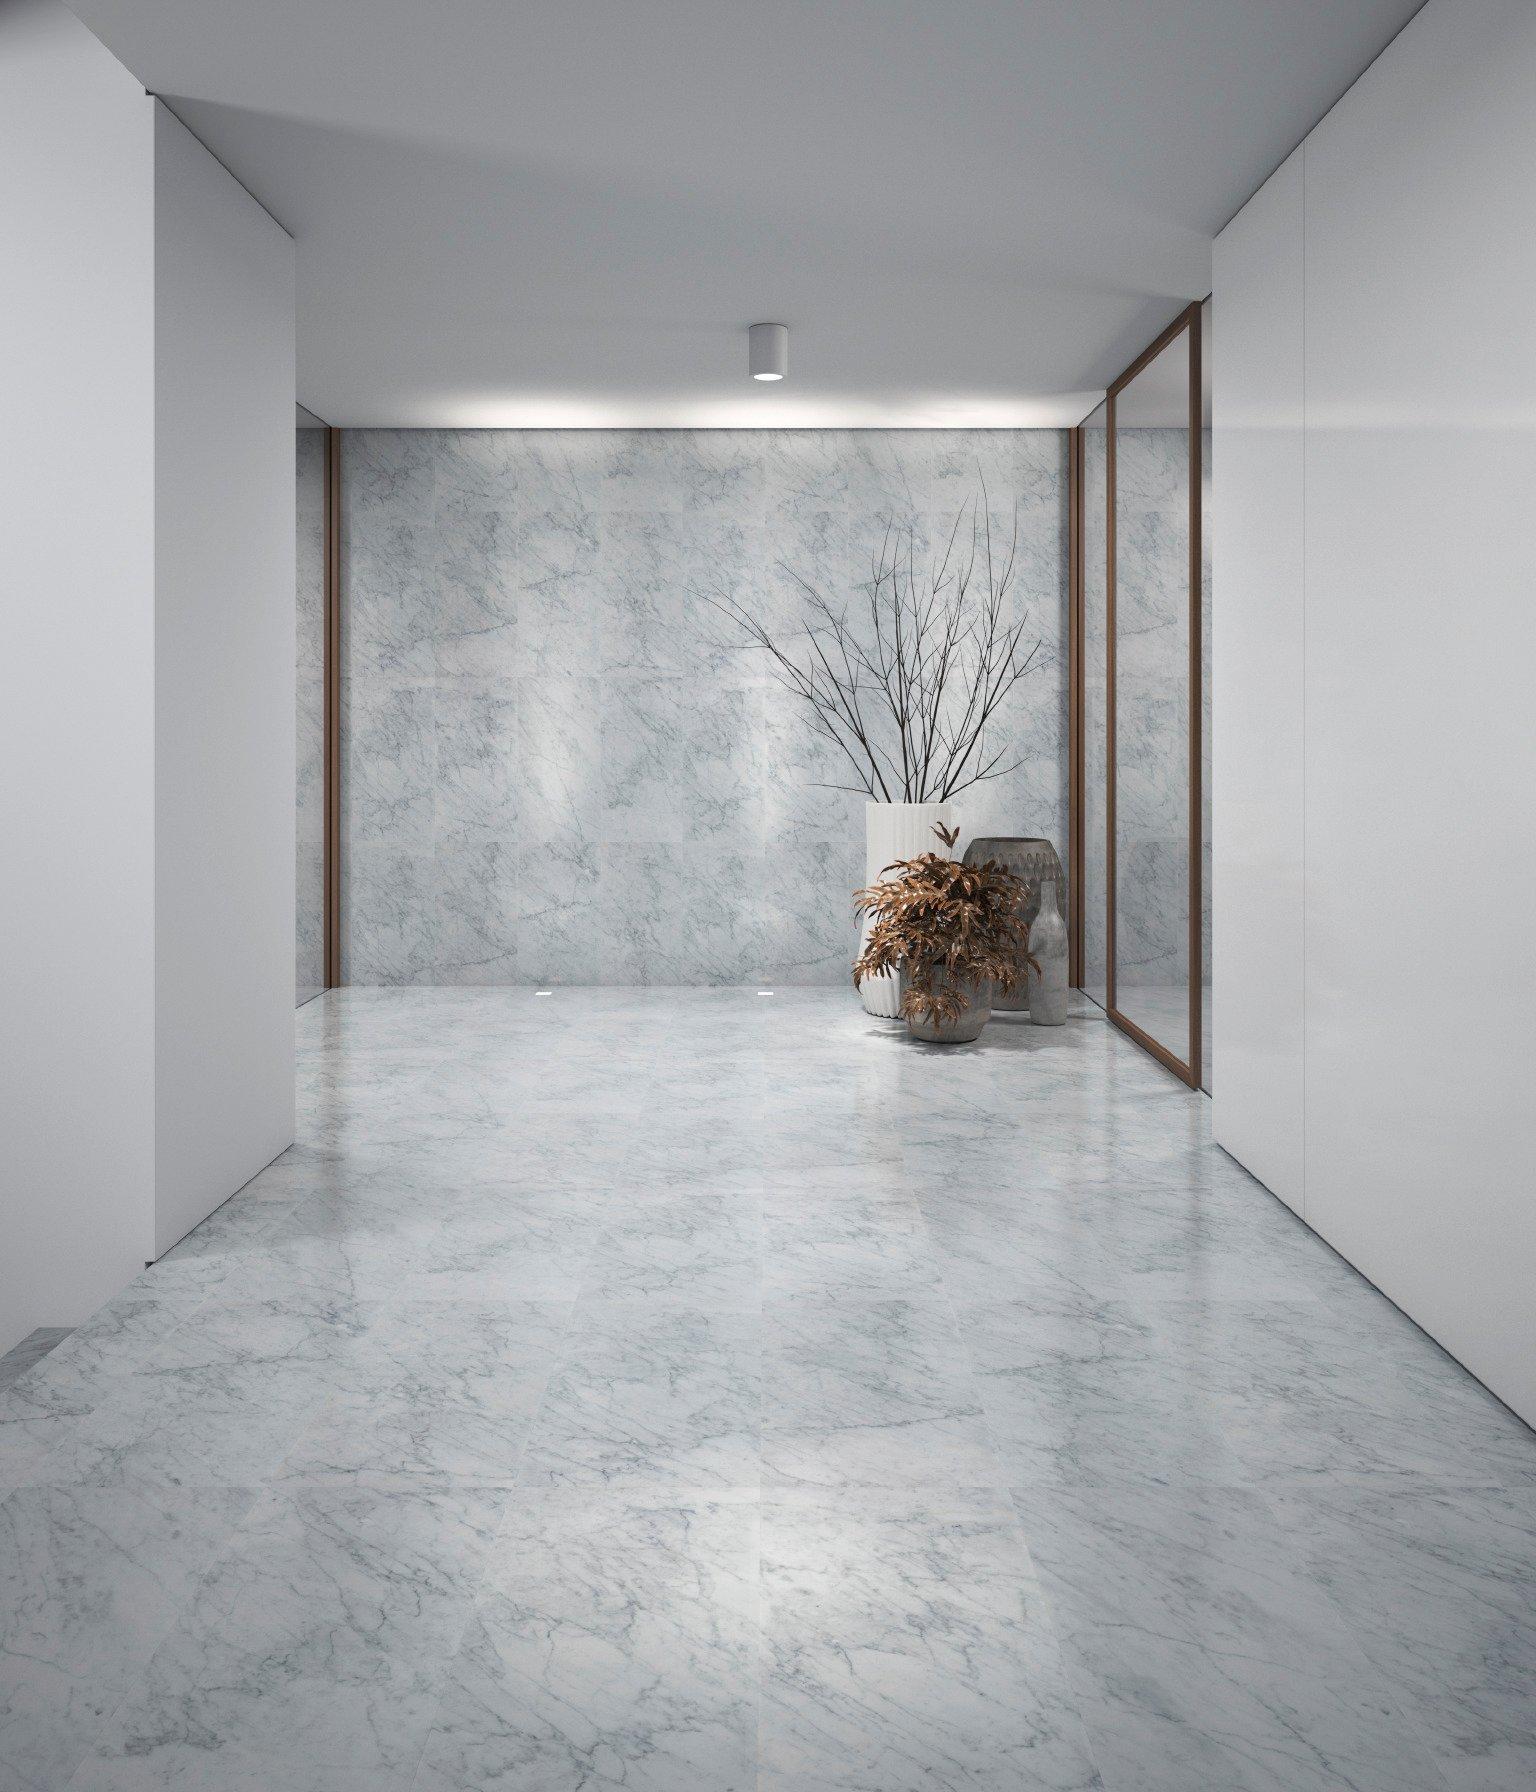 Bianco Carrara Polished Marble Stone Tile